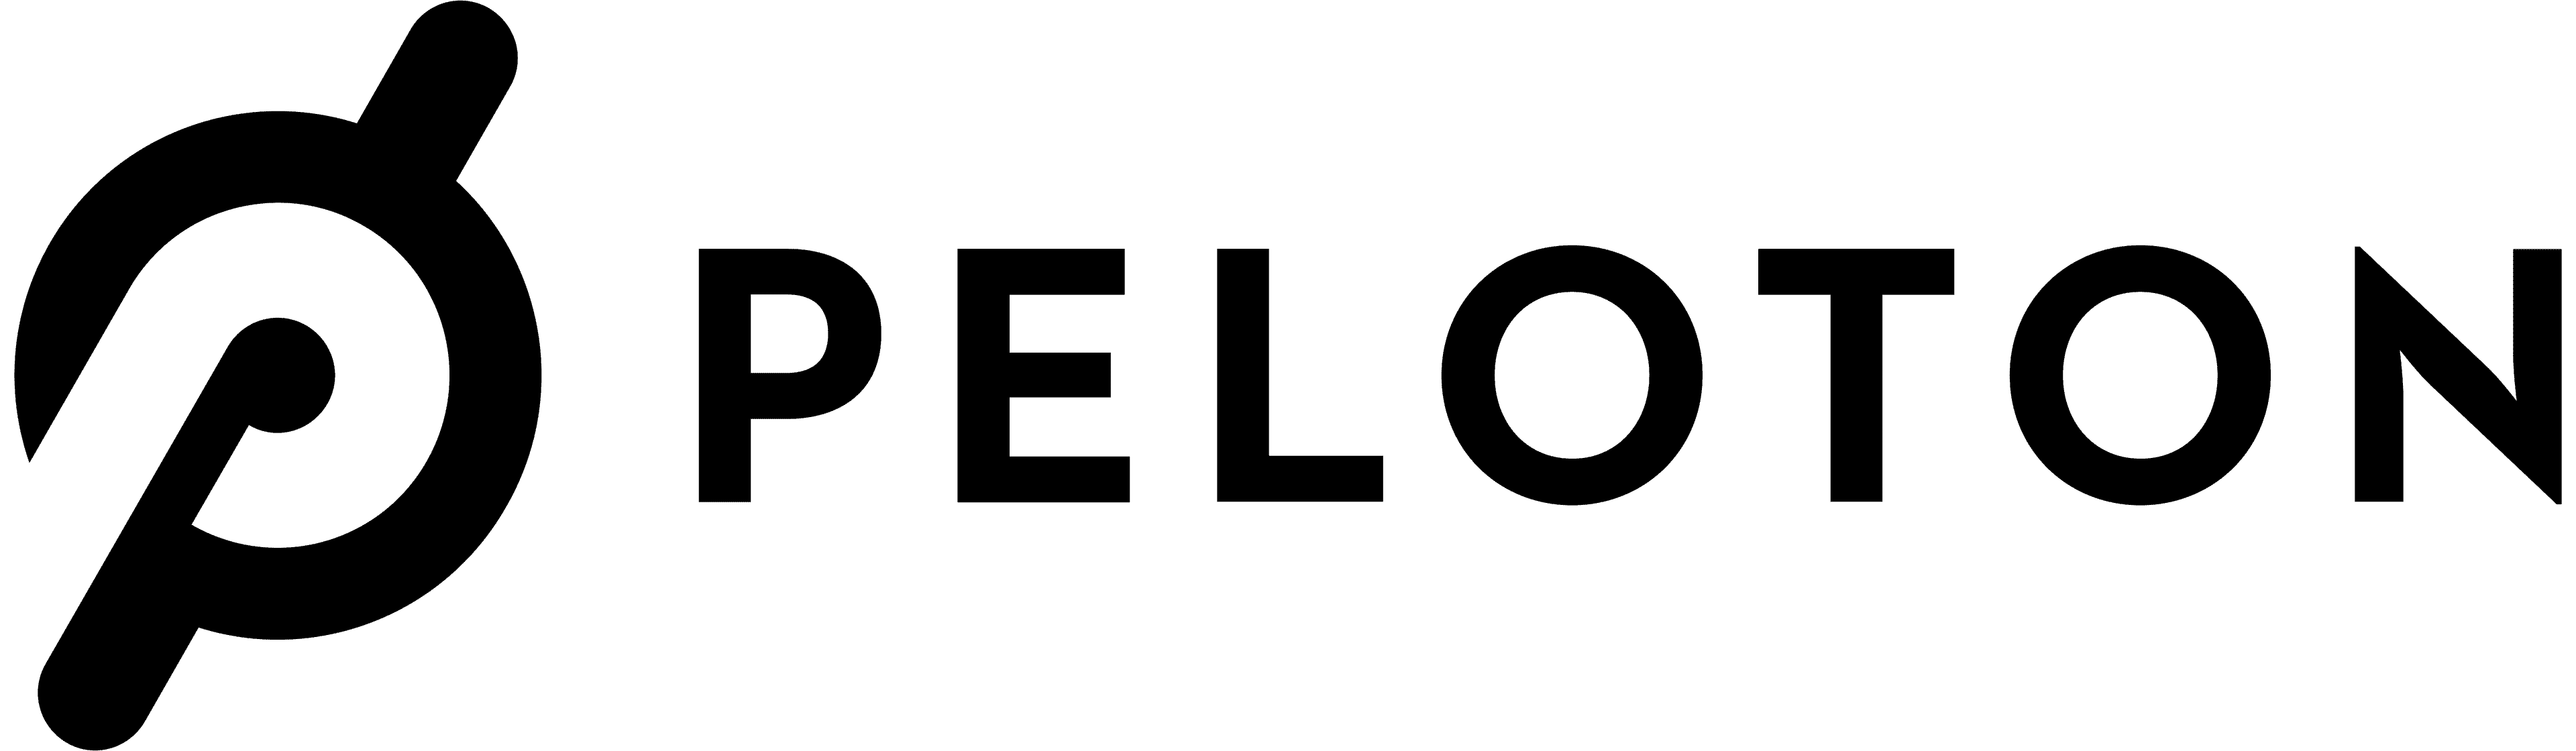 peloton logo